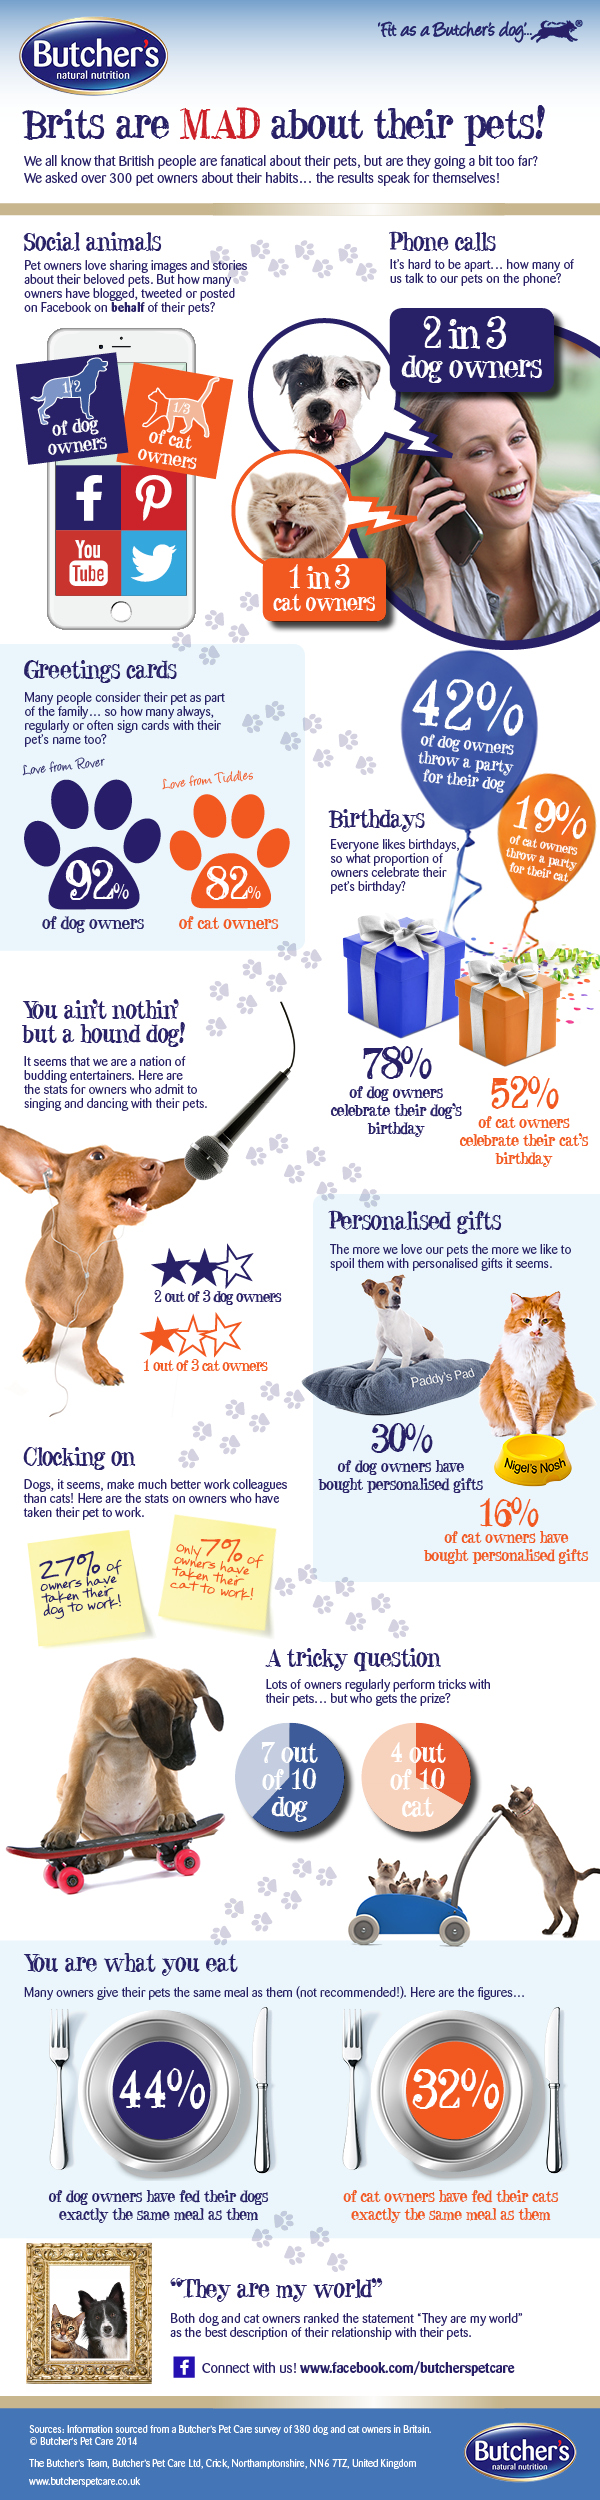 Butchers-pet-care-pet-owner-infographic